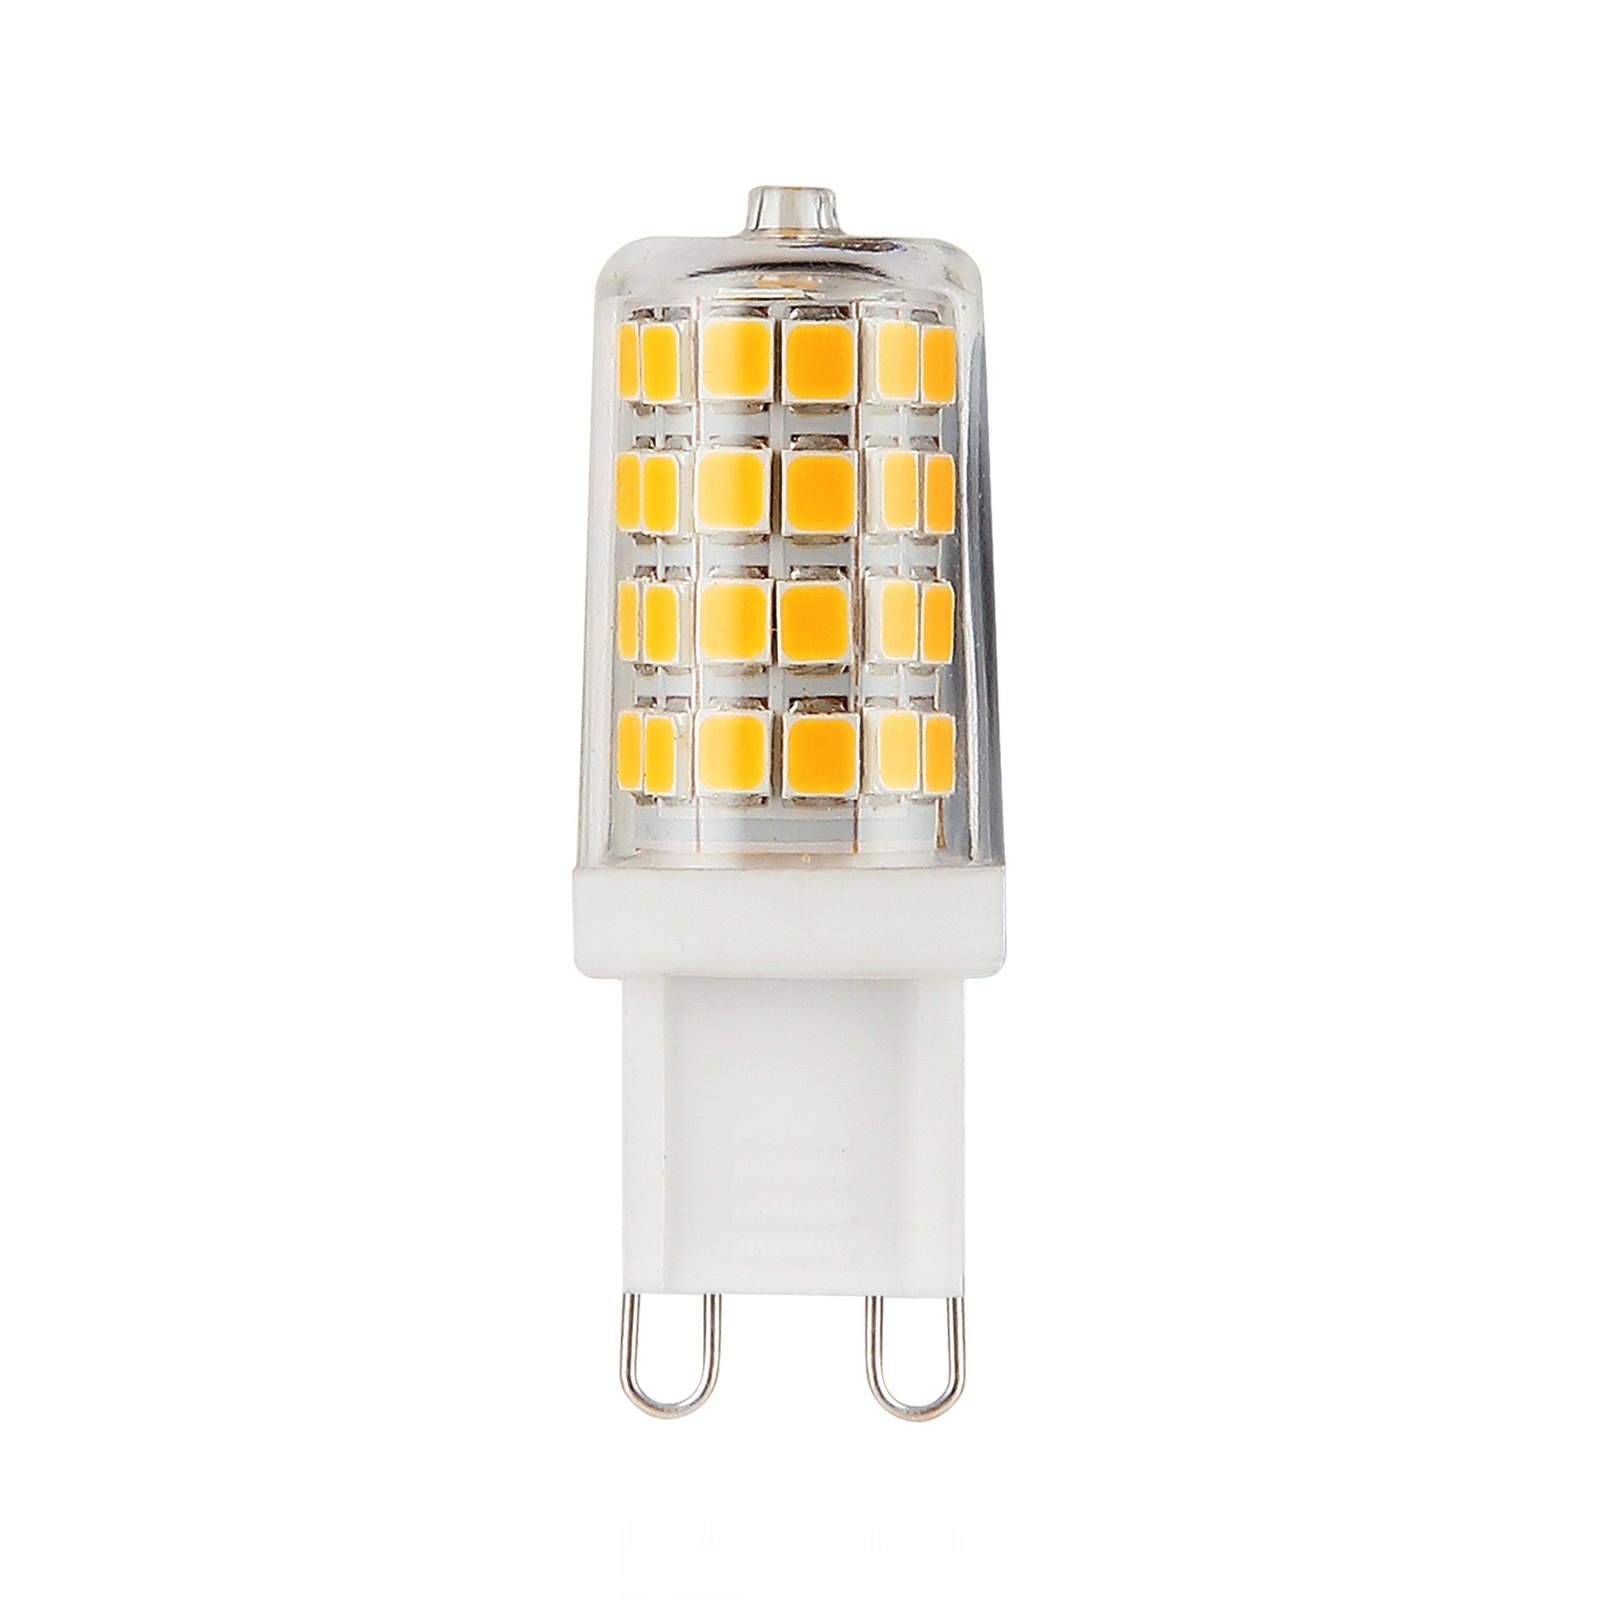 Bi-pin LED bulb G9 3W cool white 4000K 350 lumens